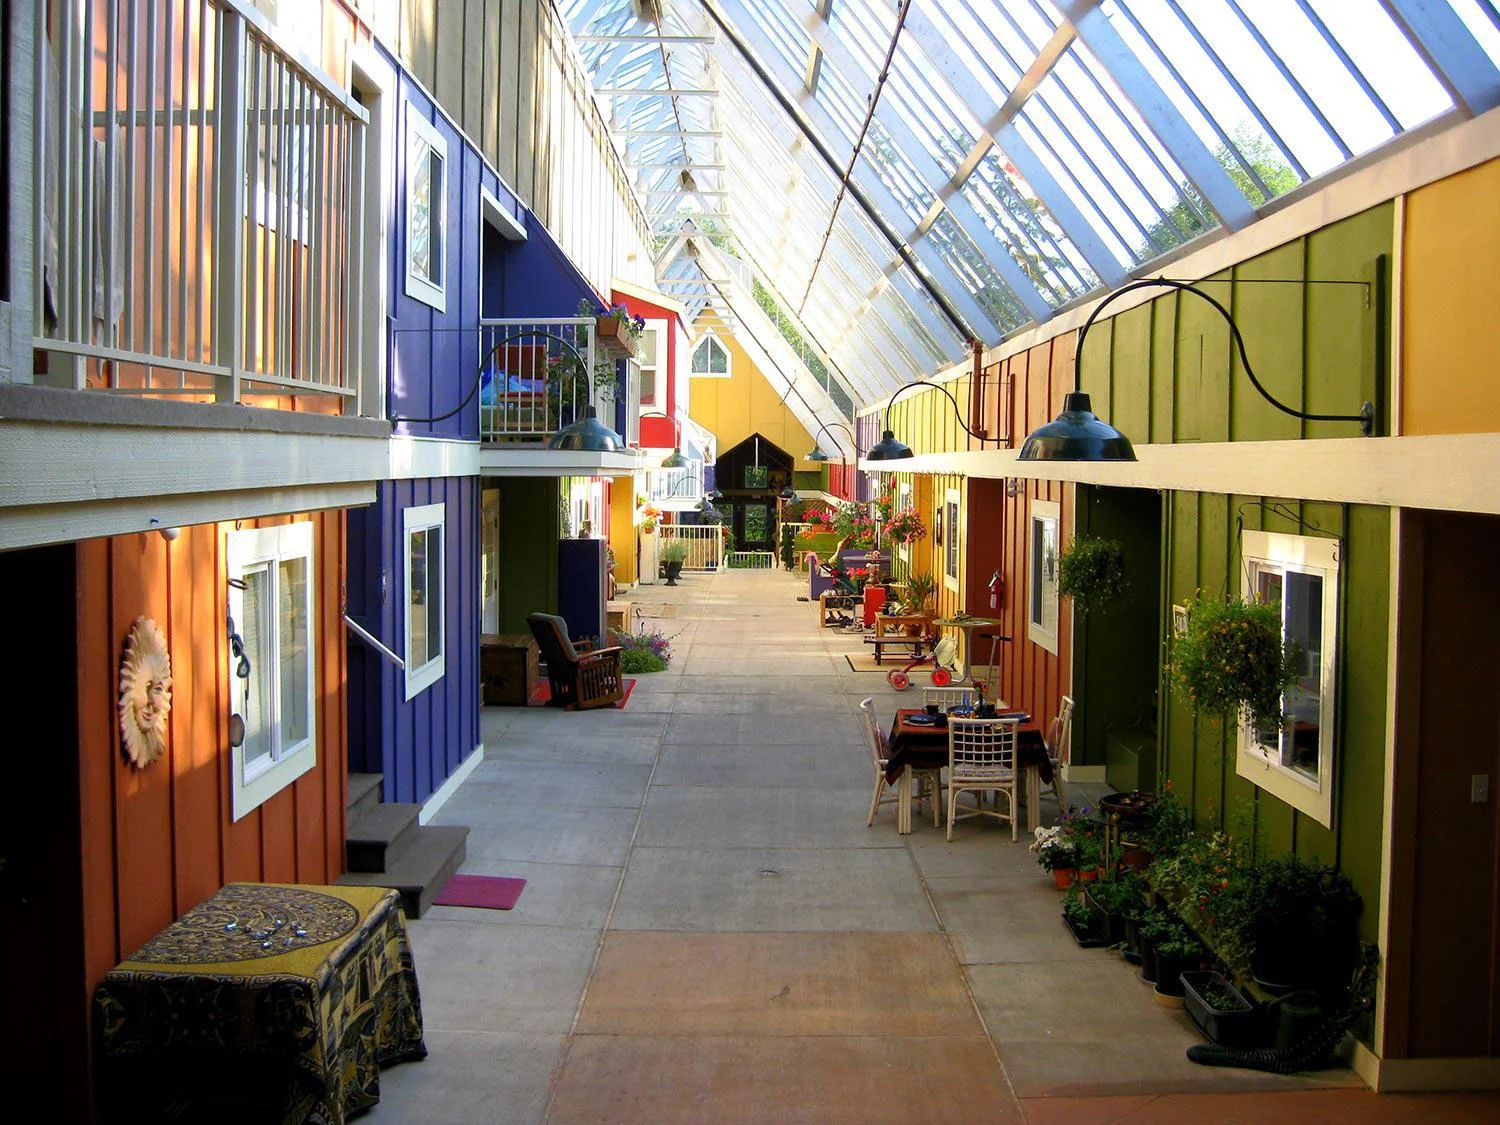 Cooperative housing in Denmark